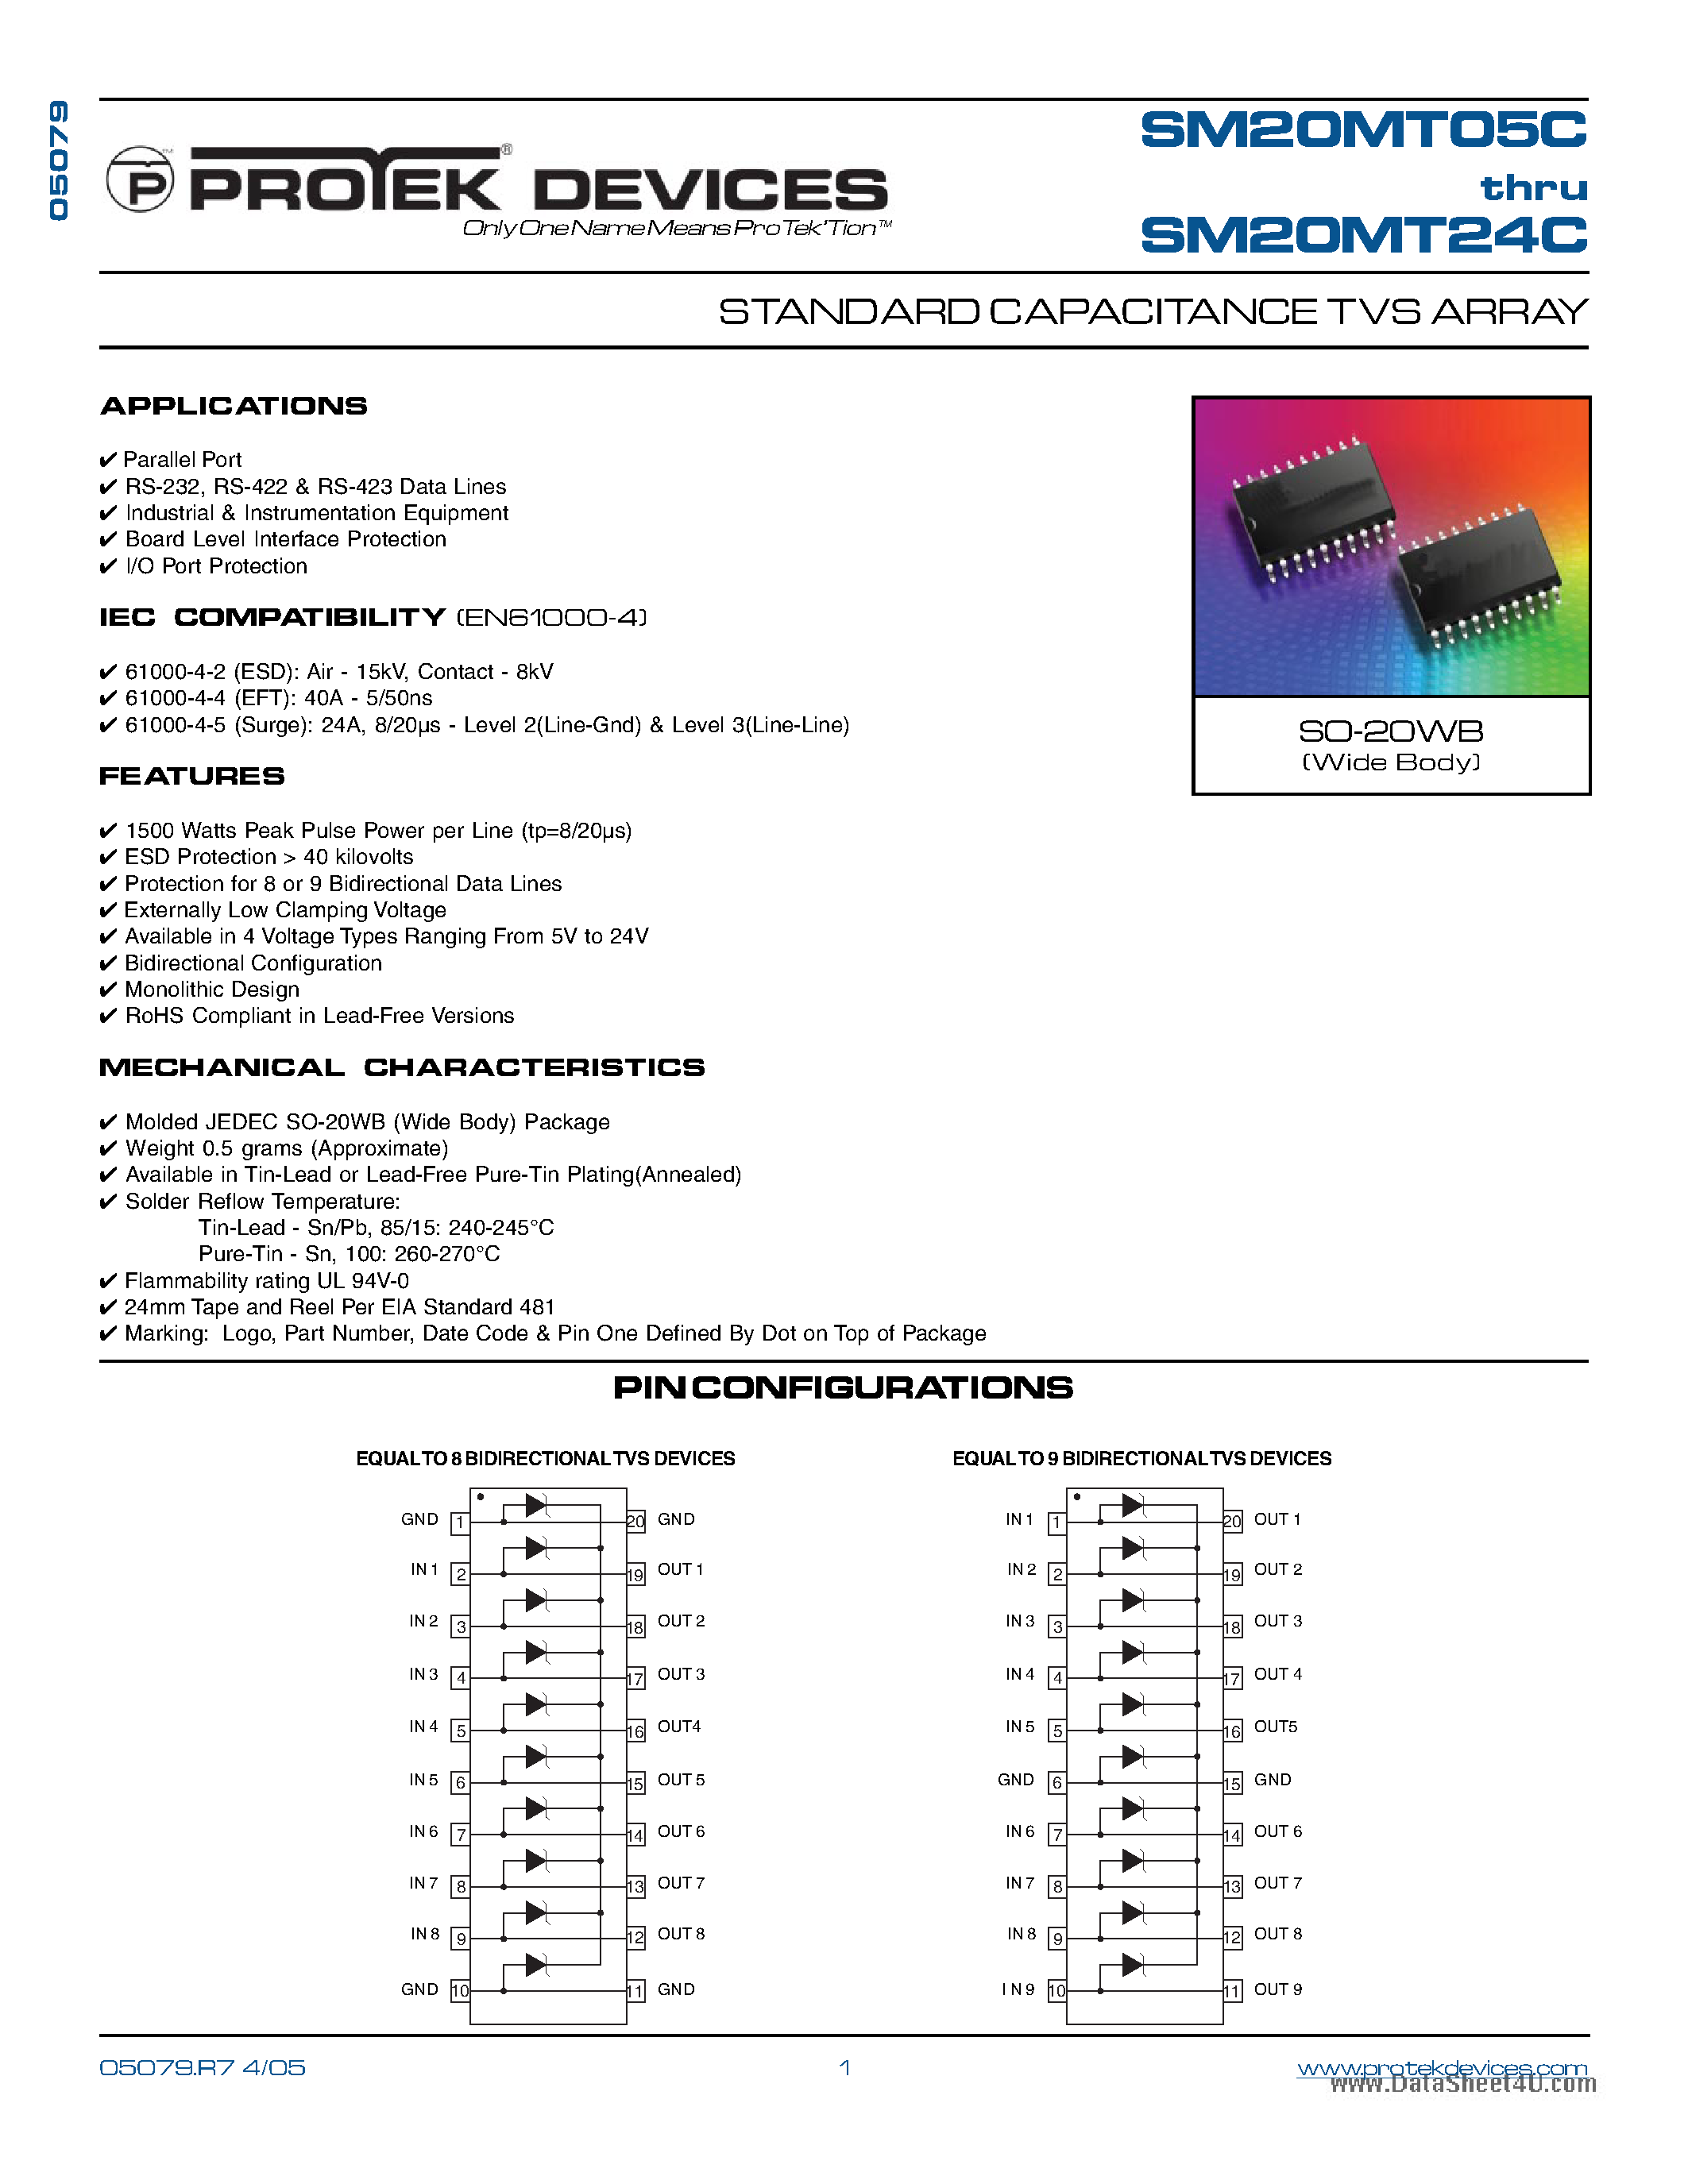 Datasheet SM20MT05C - (SM20MT05C - SM20MT24C) STANDARD CAPACITANCE TVS ARRAY page 1